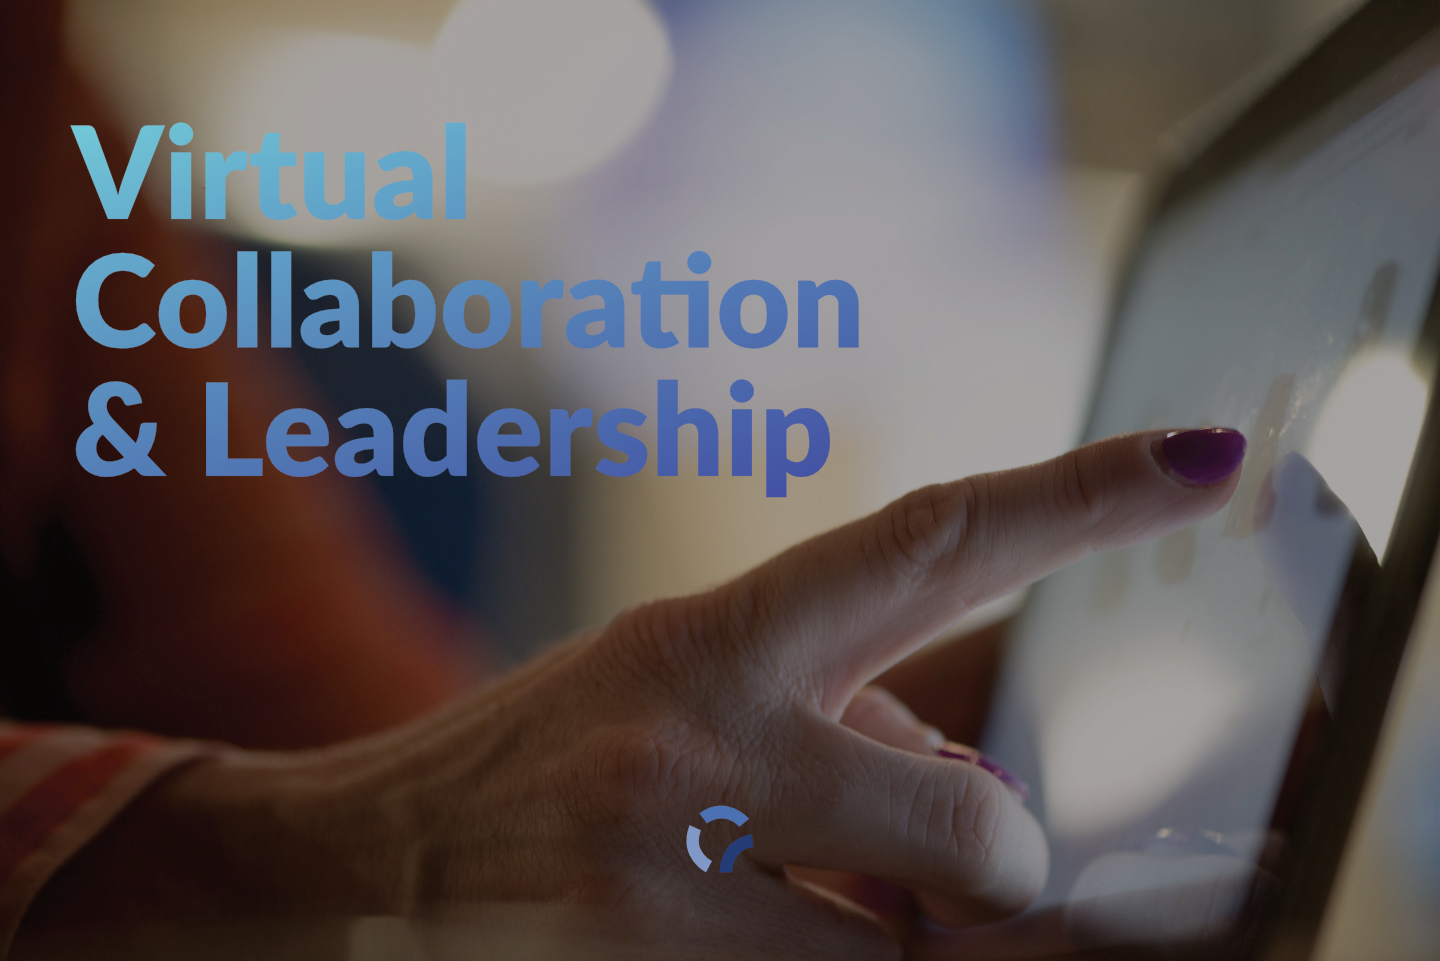 Virtual Collaboration Leadership featured image